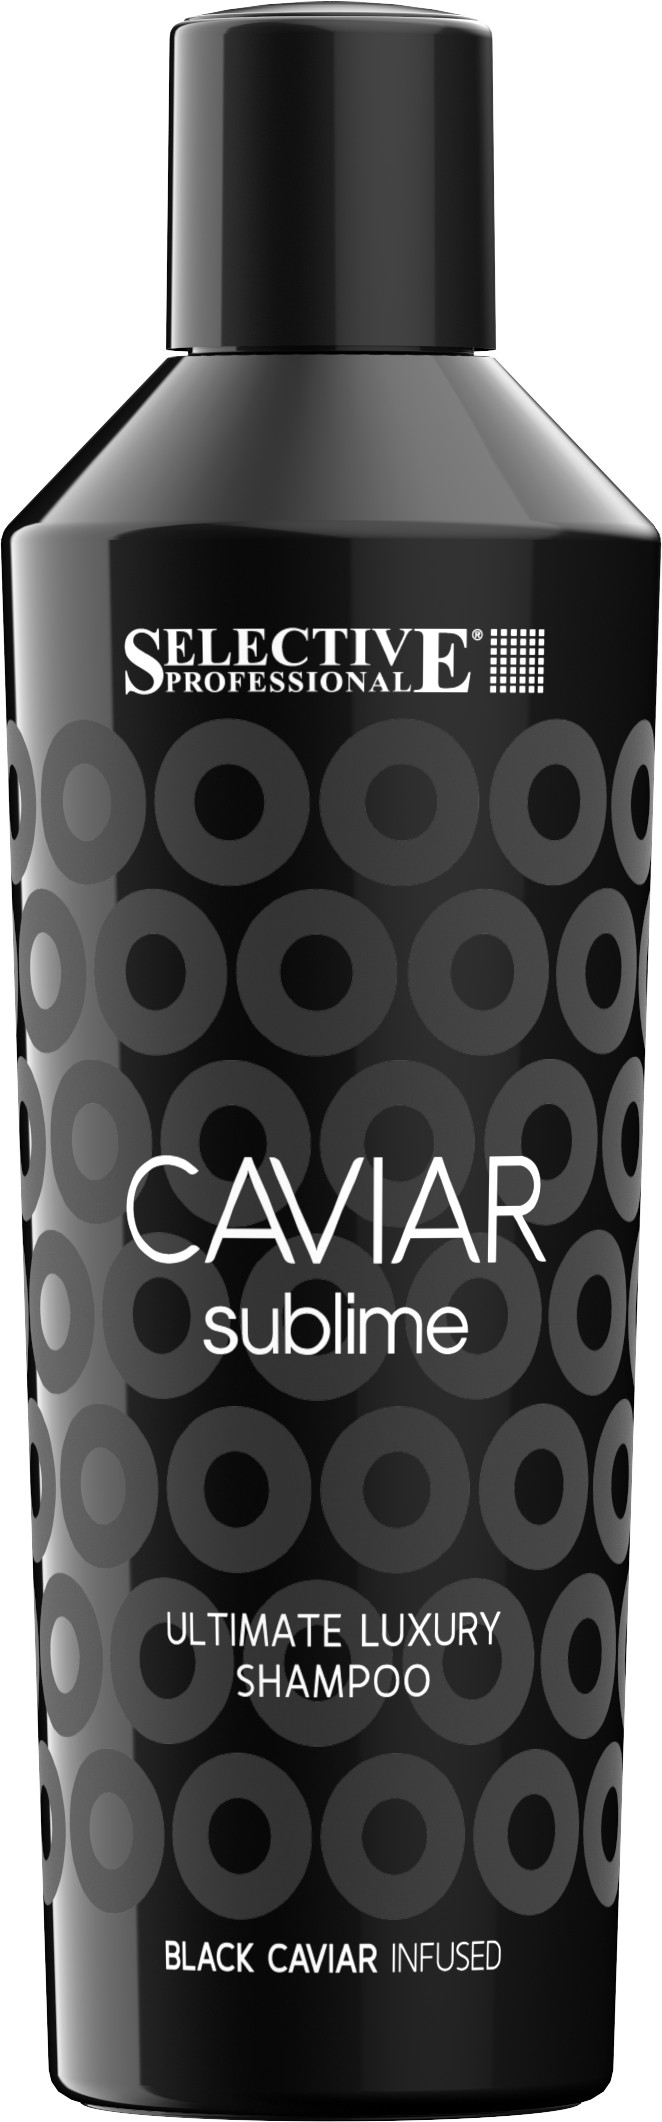 Caviar Sublime Selective Professional